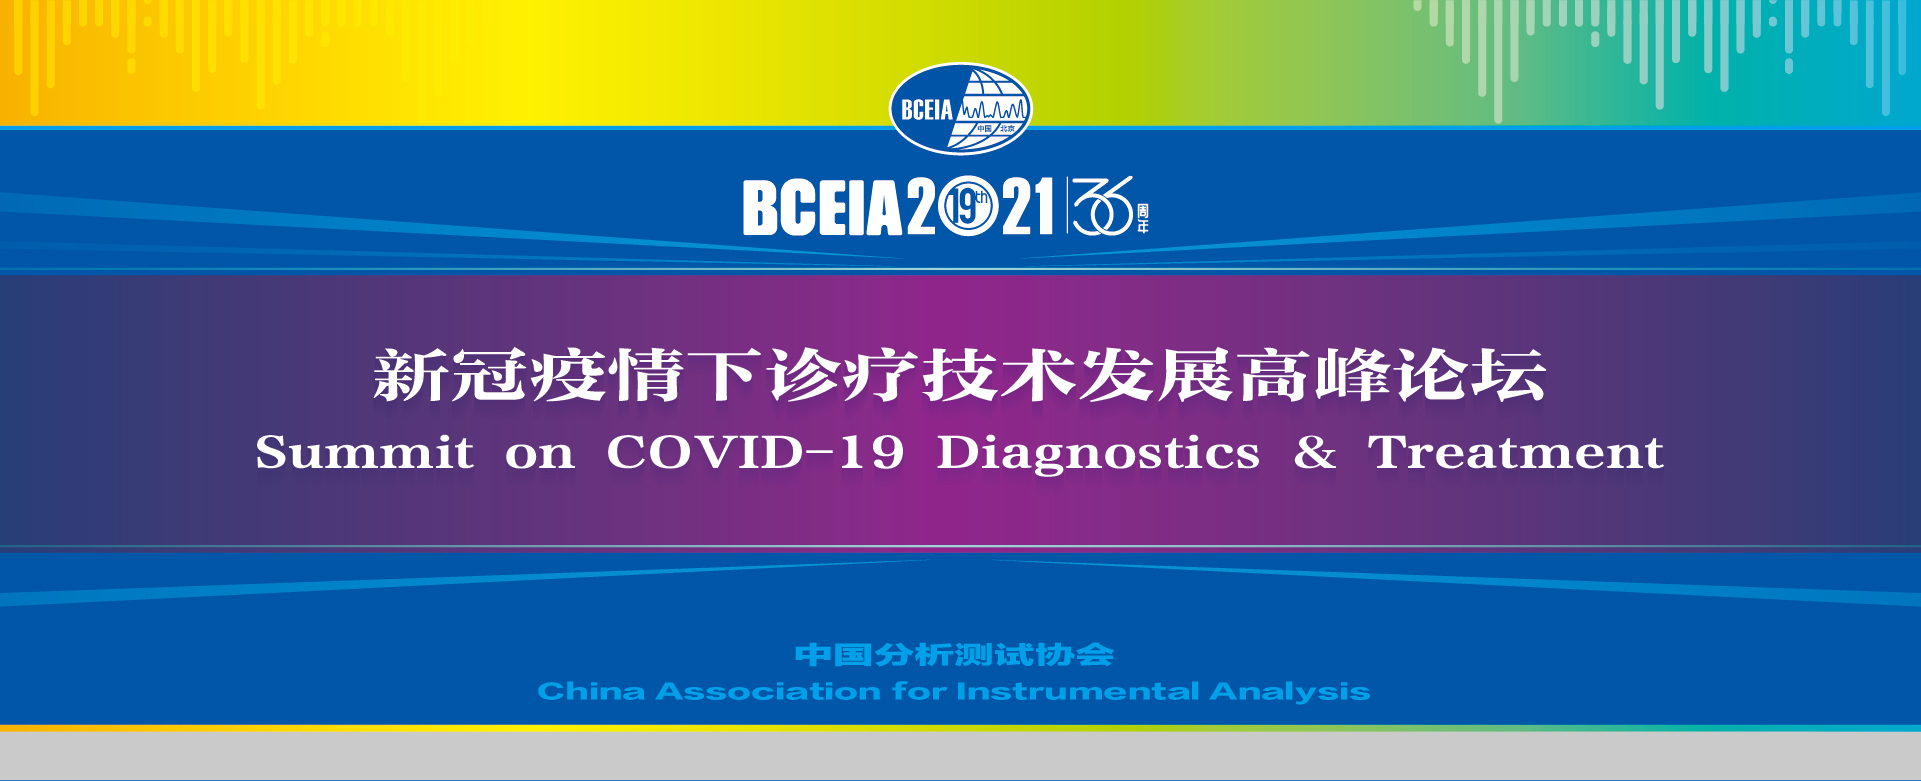 "قمة تشخيص وعلاج COVID-19"